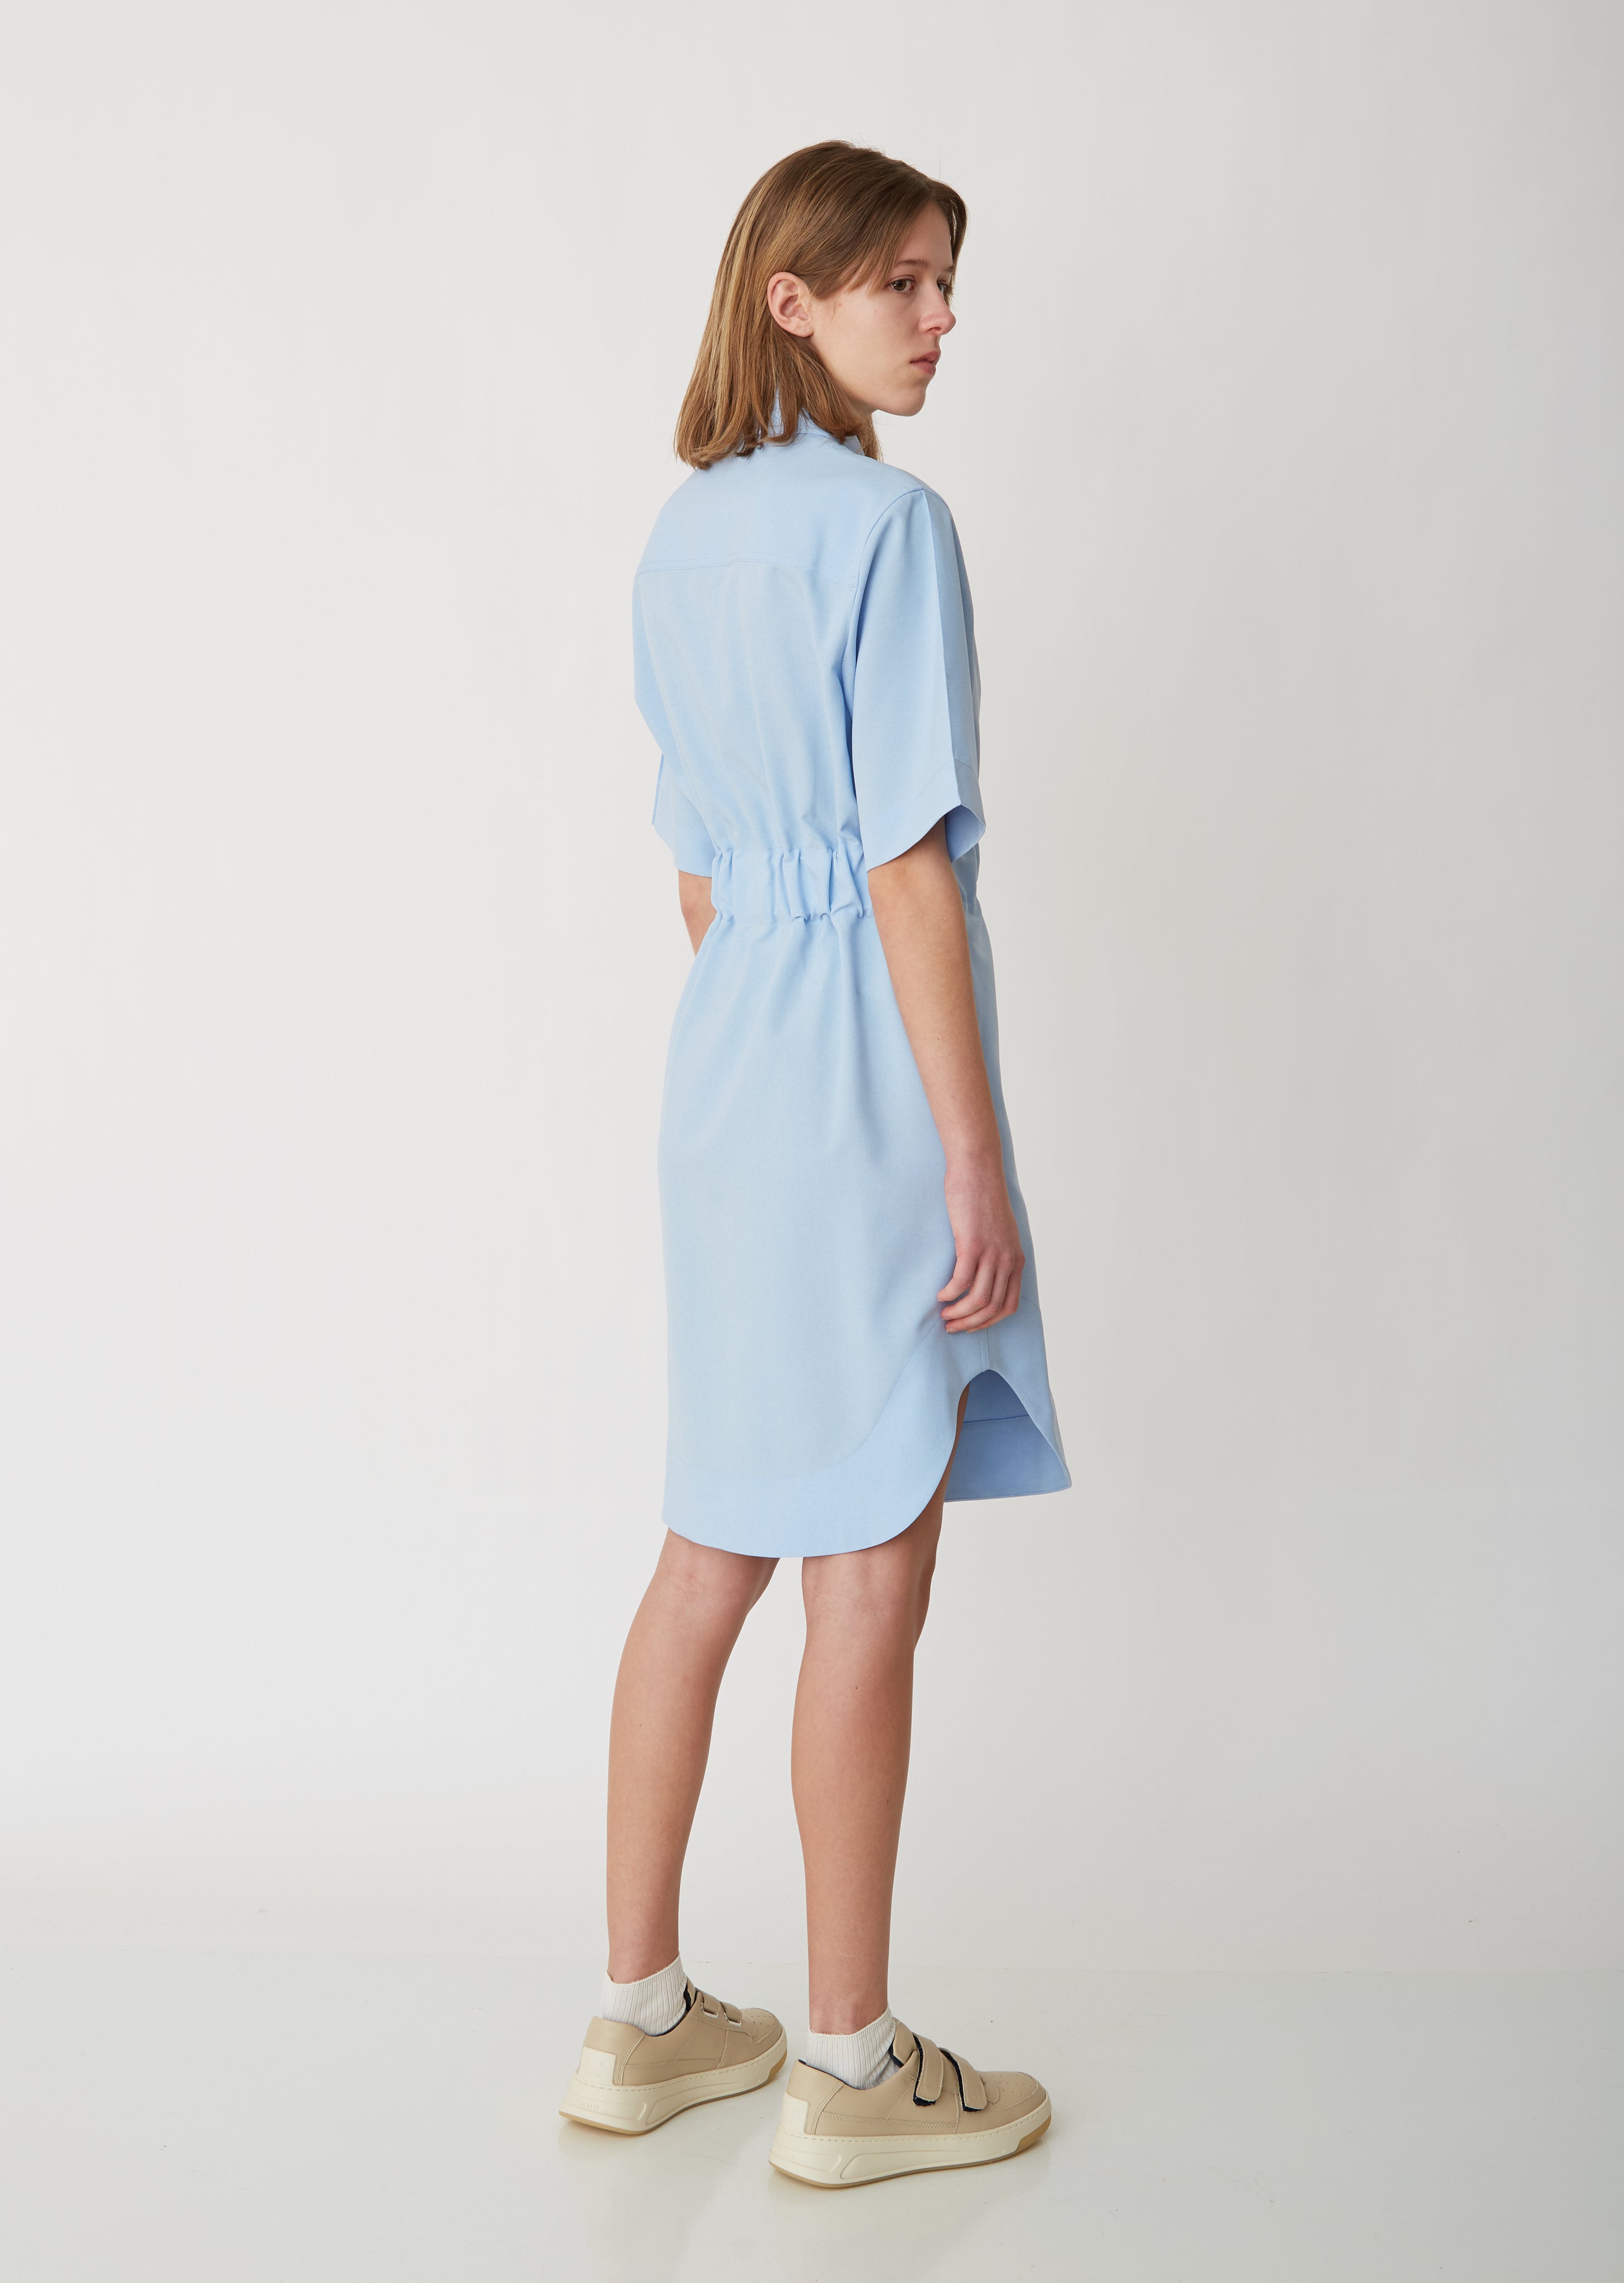 Size36【Acne Studios】 Della shirt dress